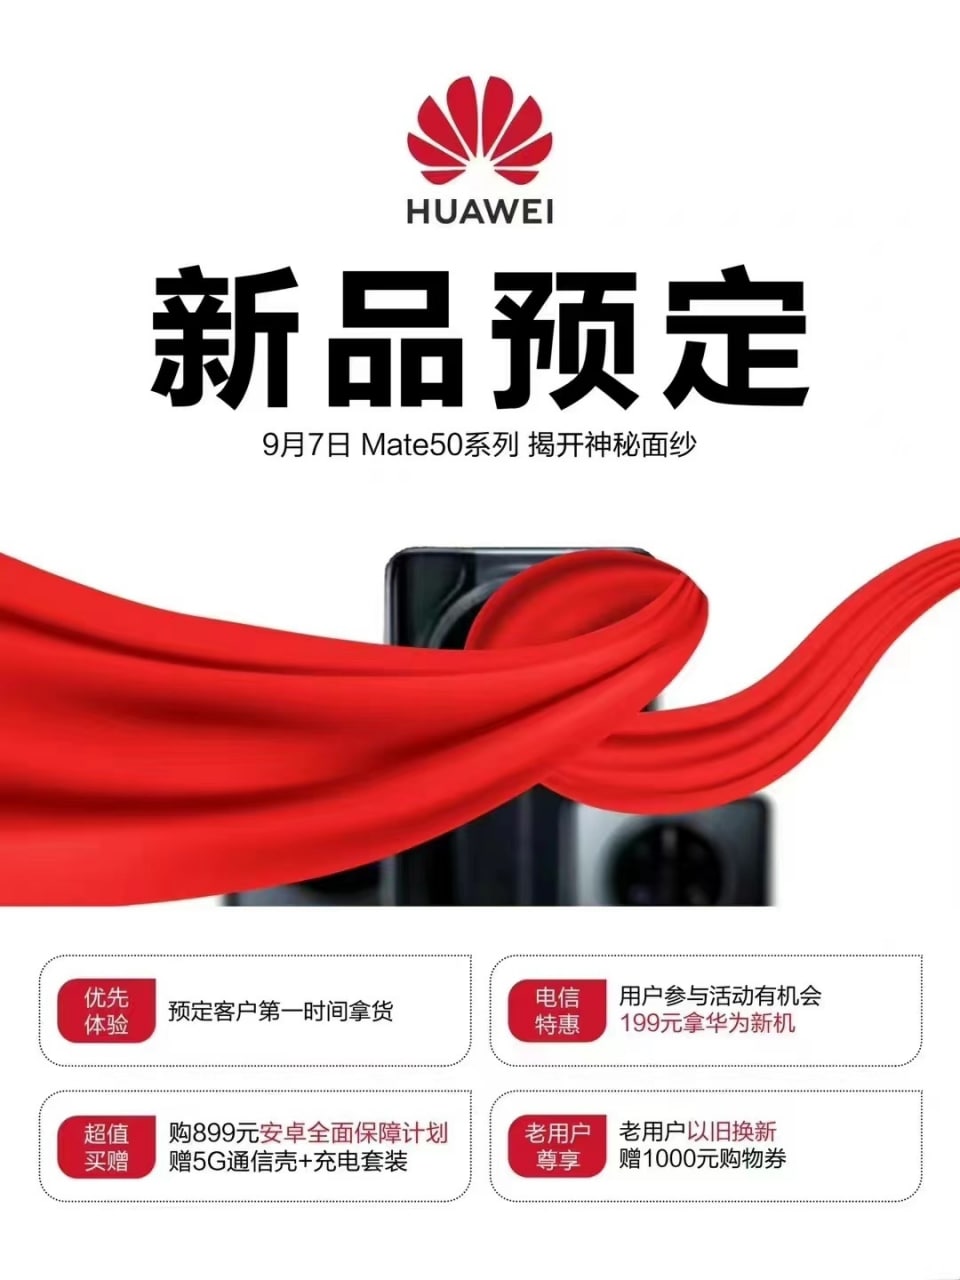 Huawei Mate 50 promo